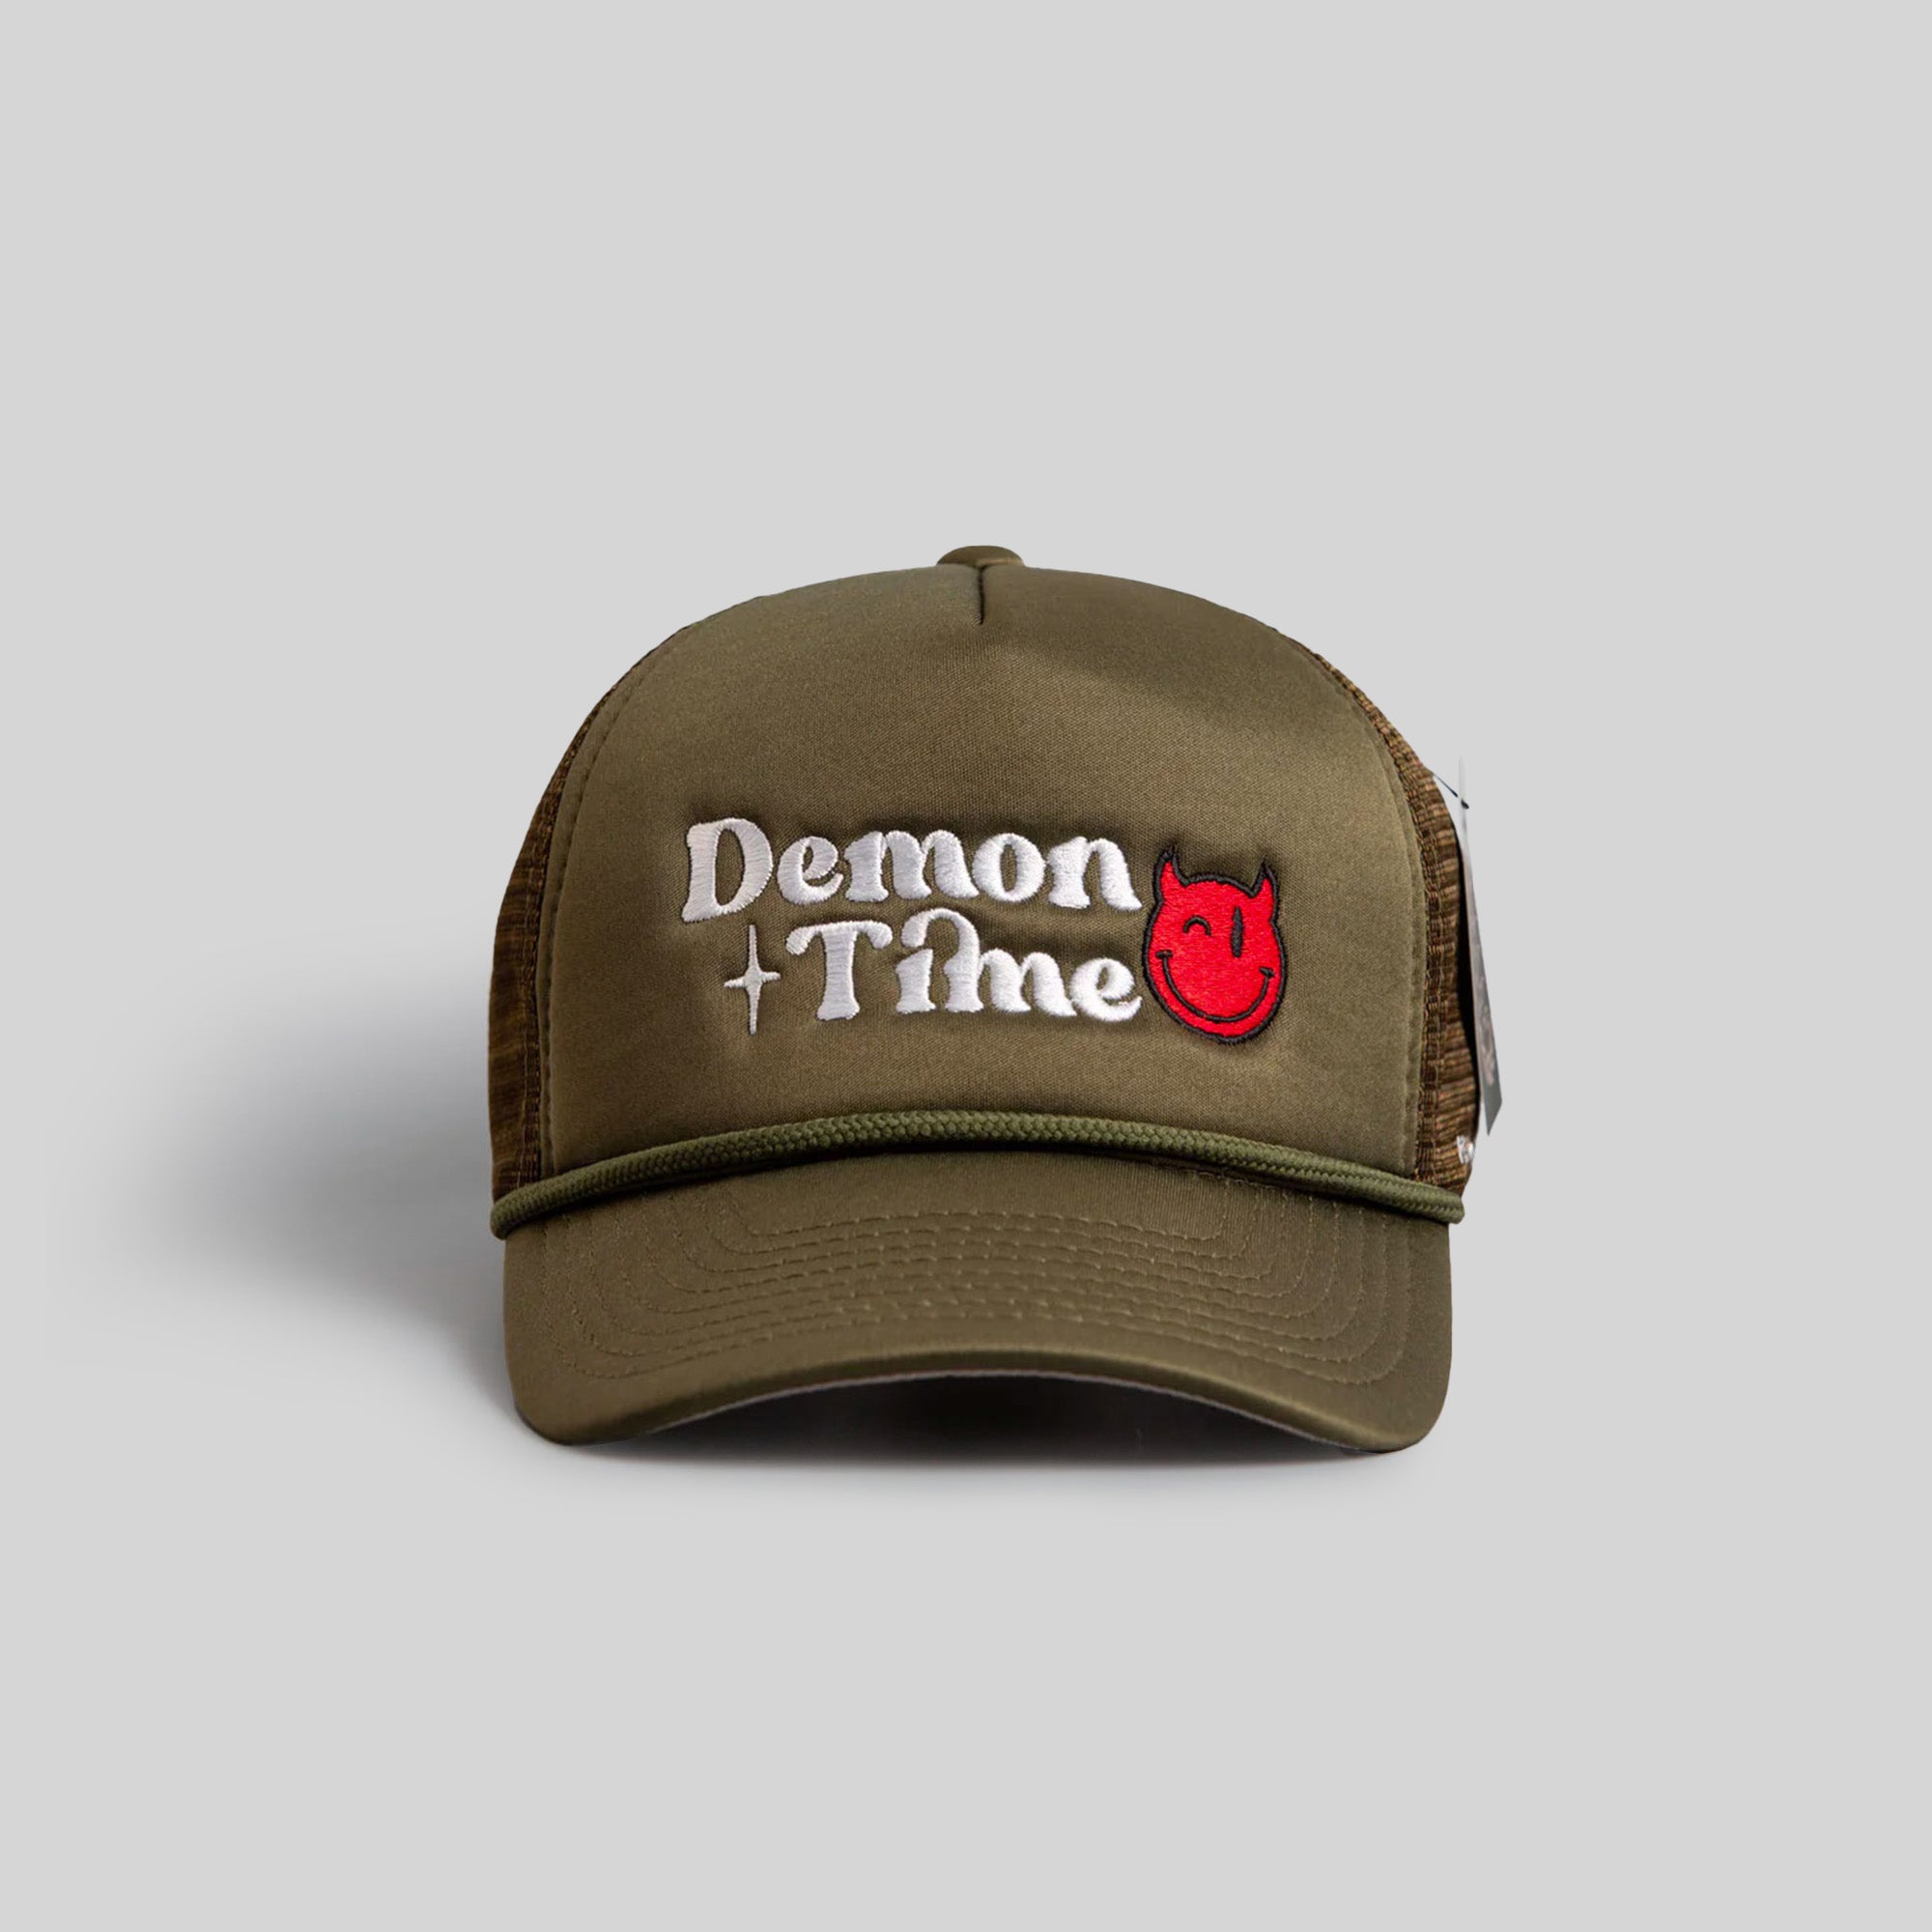 DEMON TIME OLIVE TRUCKER HAT